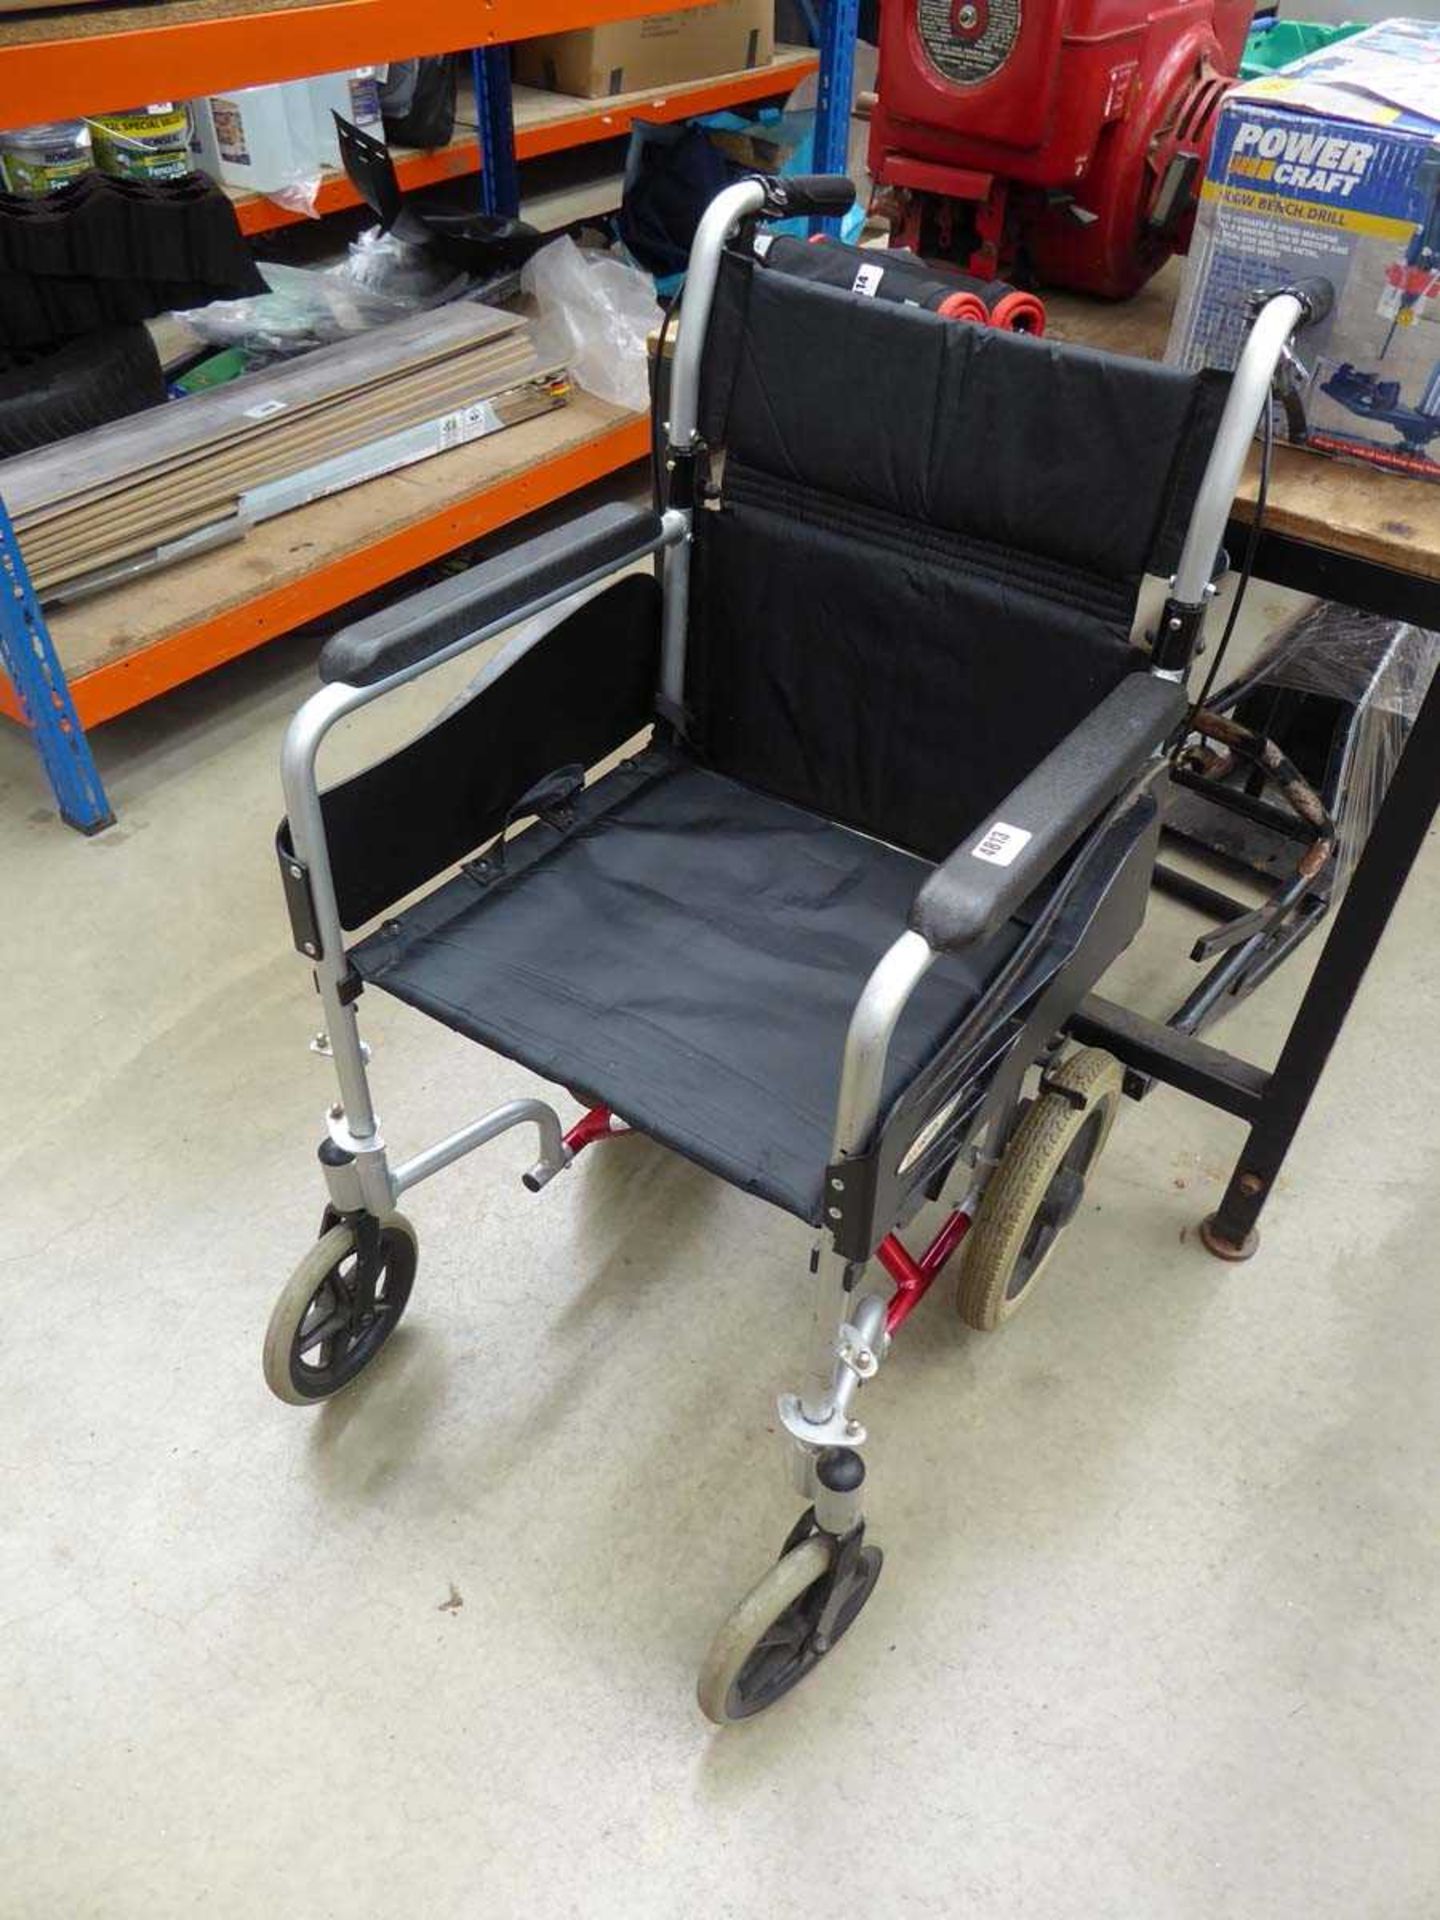 4 wheeled fold up wheelchair